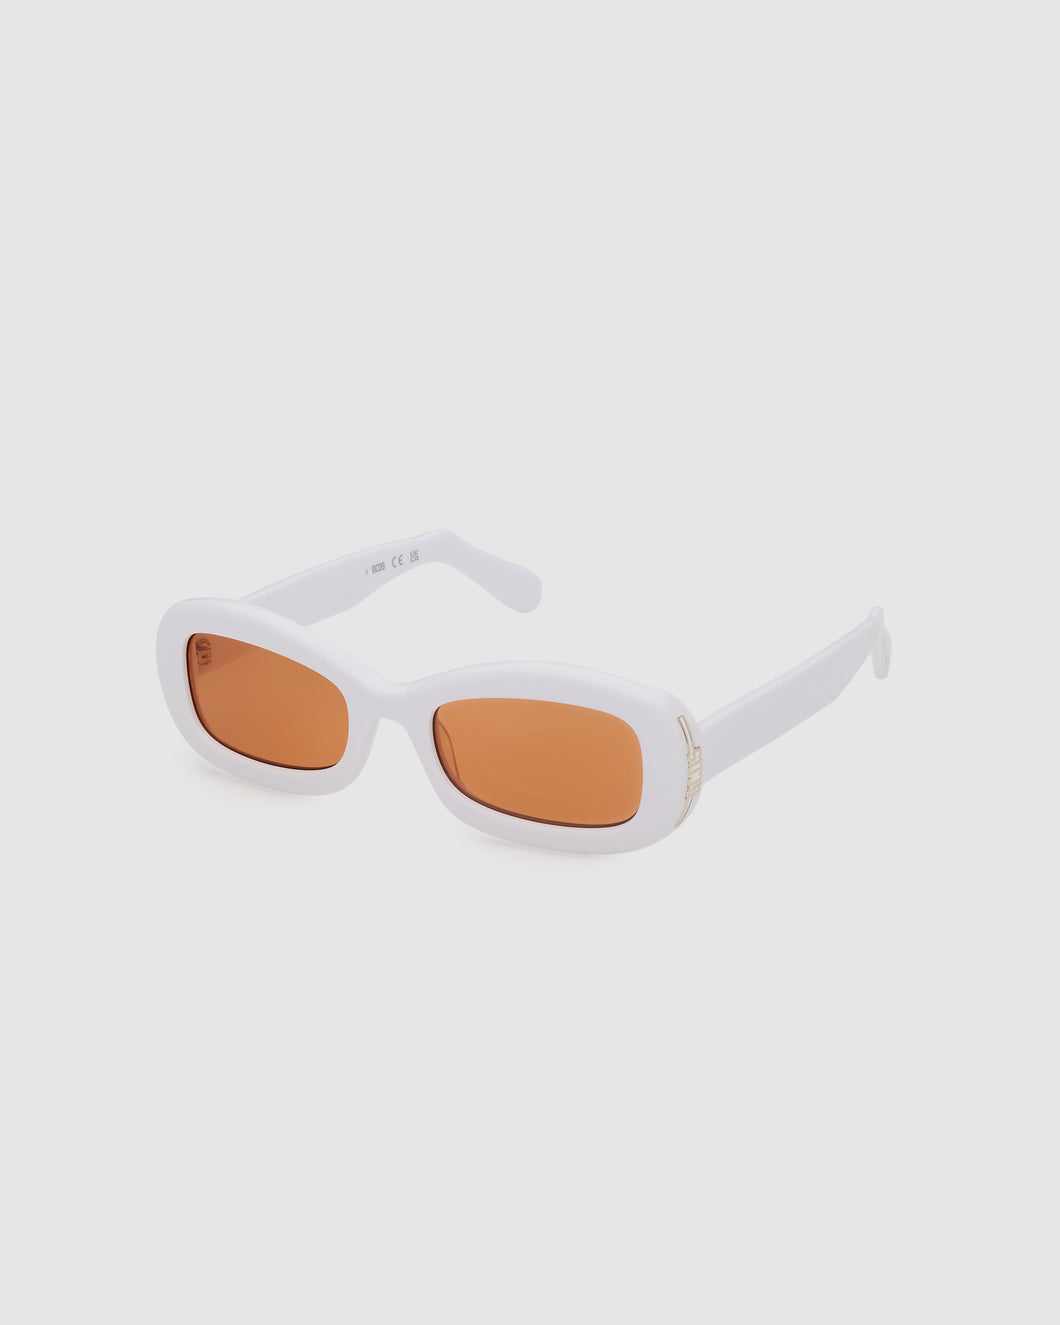 GD0027 Oval sunglasses : Unisex Sunglasses White  | GCDS